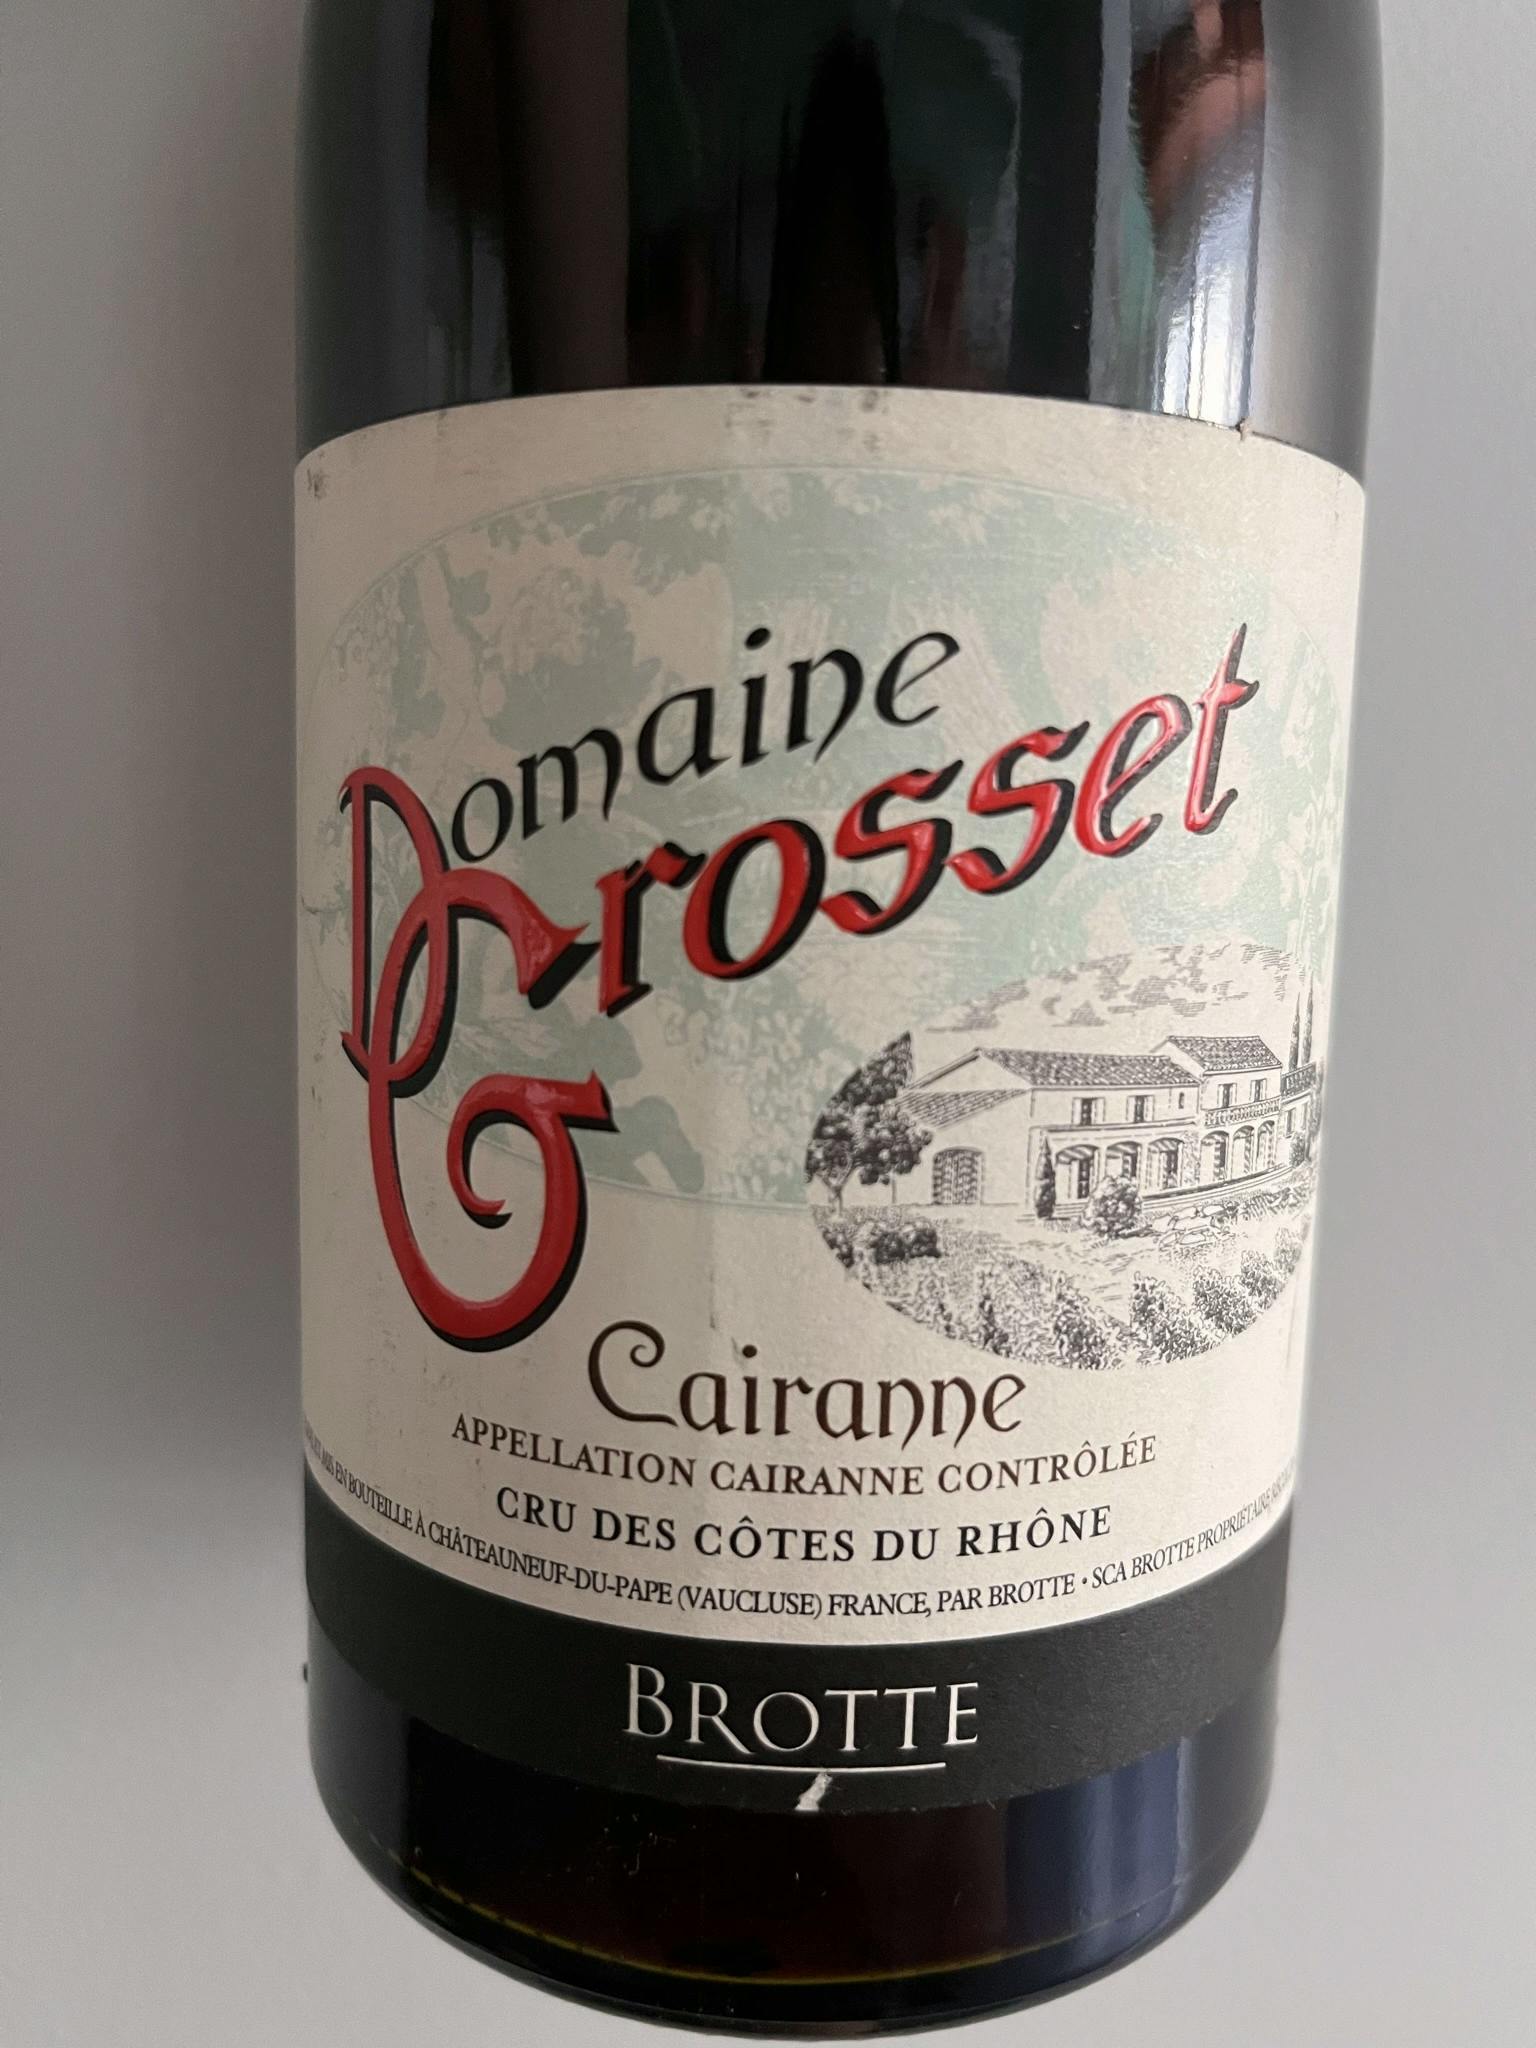 Brotte S. A. Domaine Grosset Cairanne 2019